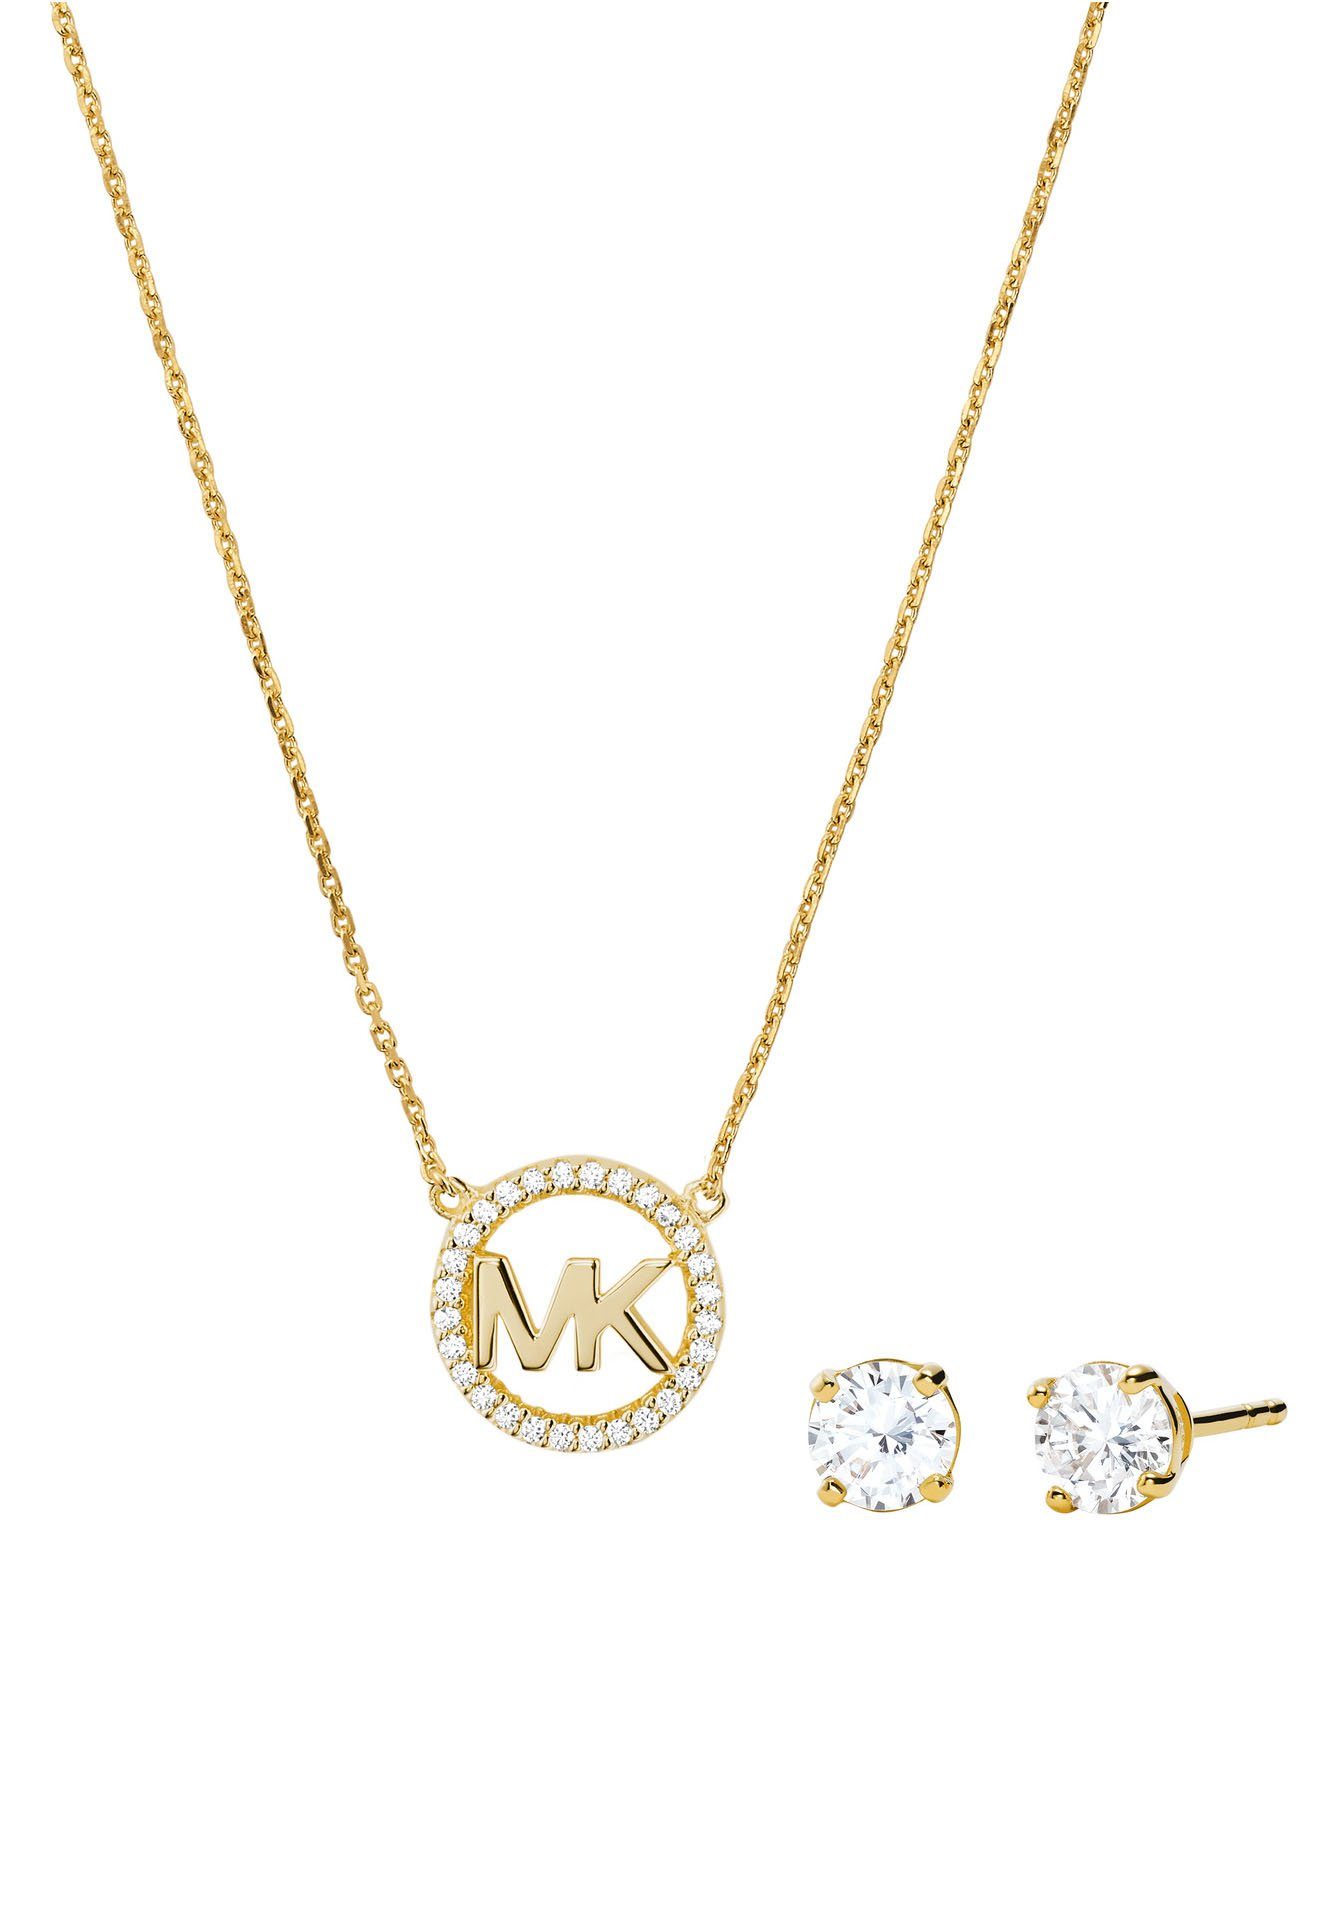 MICHAEL KORS Ohrring und Ketten Set PREMIUM, MKC1260AN040, MKC1260AN791, MKC1260AN710 (Set, 3-tlg), mit Zirkonia gelbgoldfarben-kristallweiß